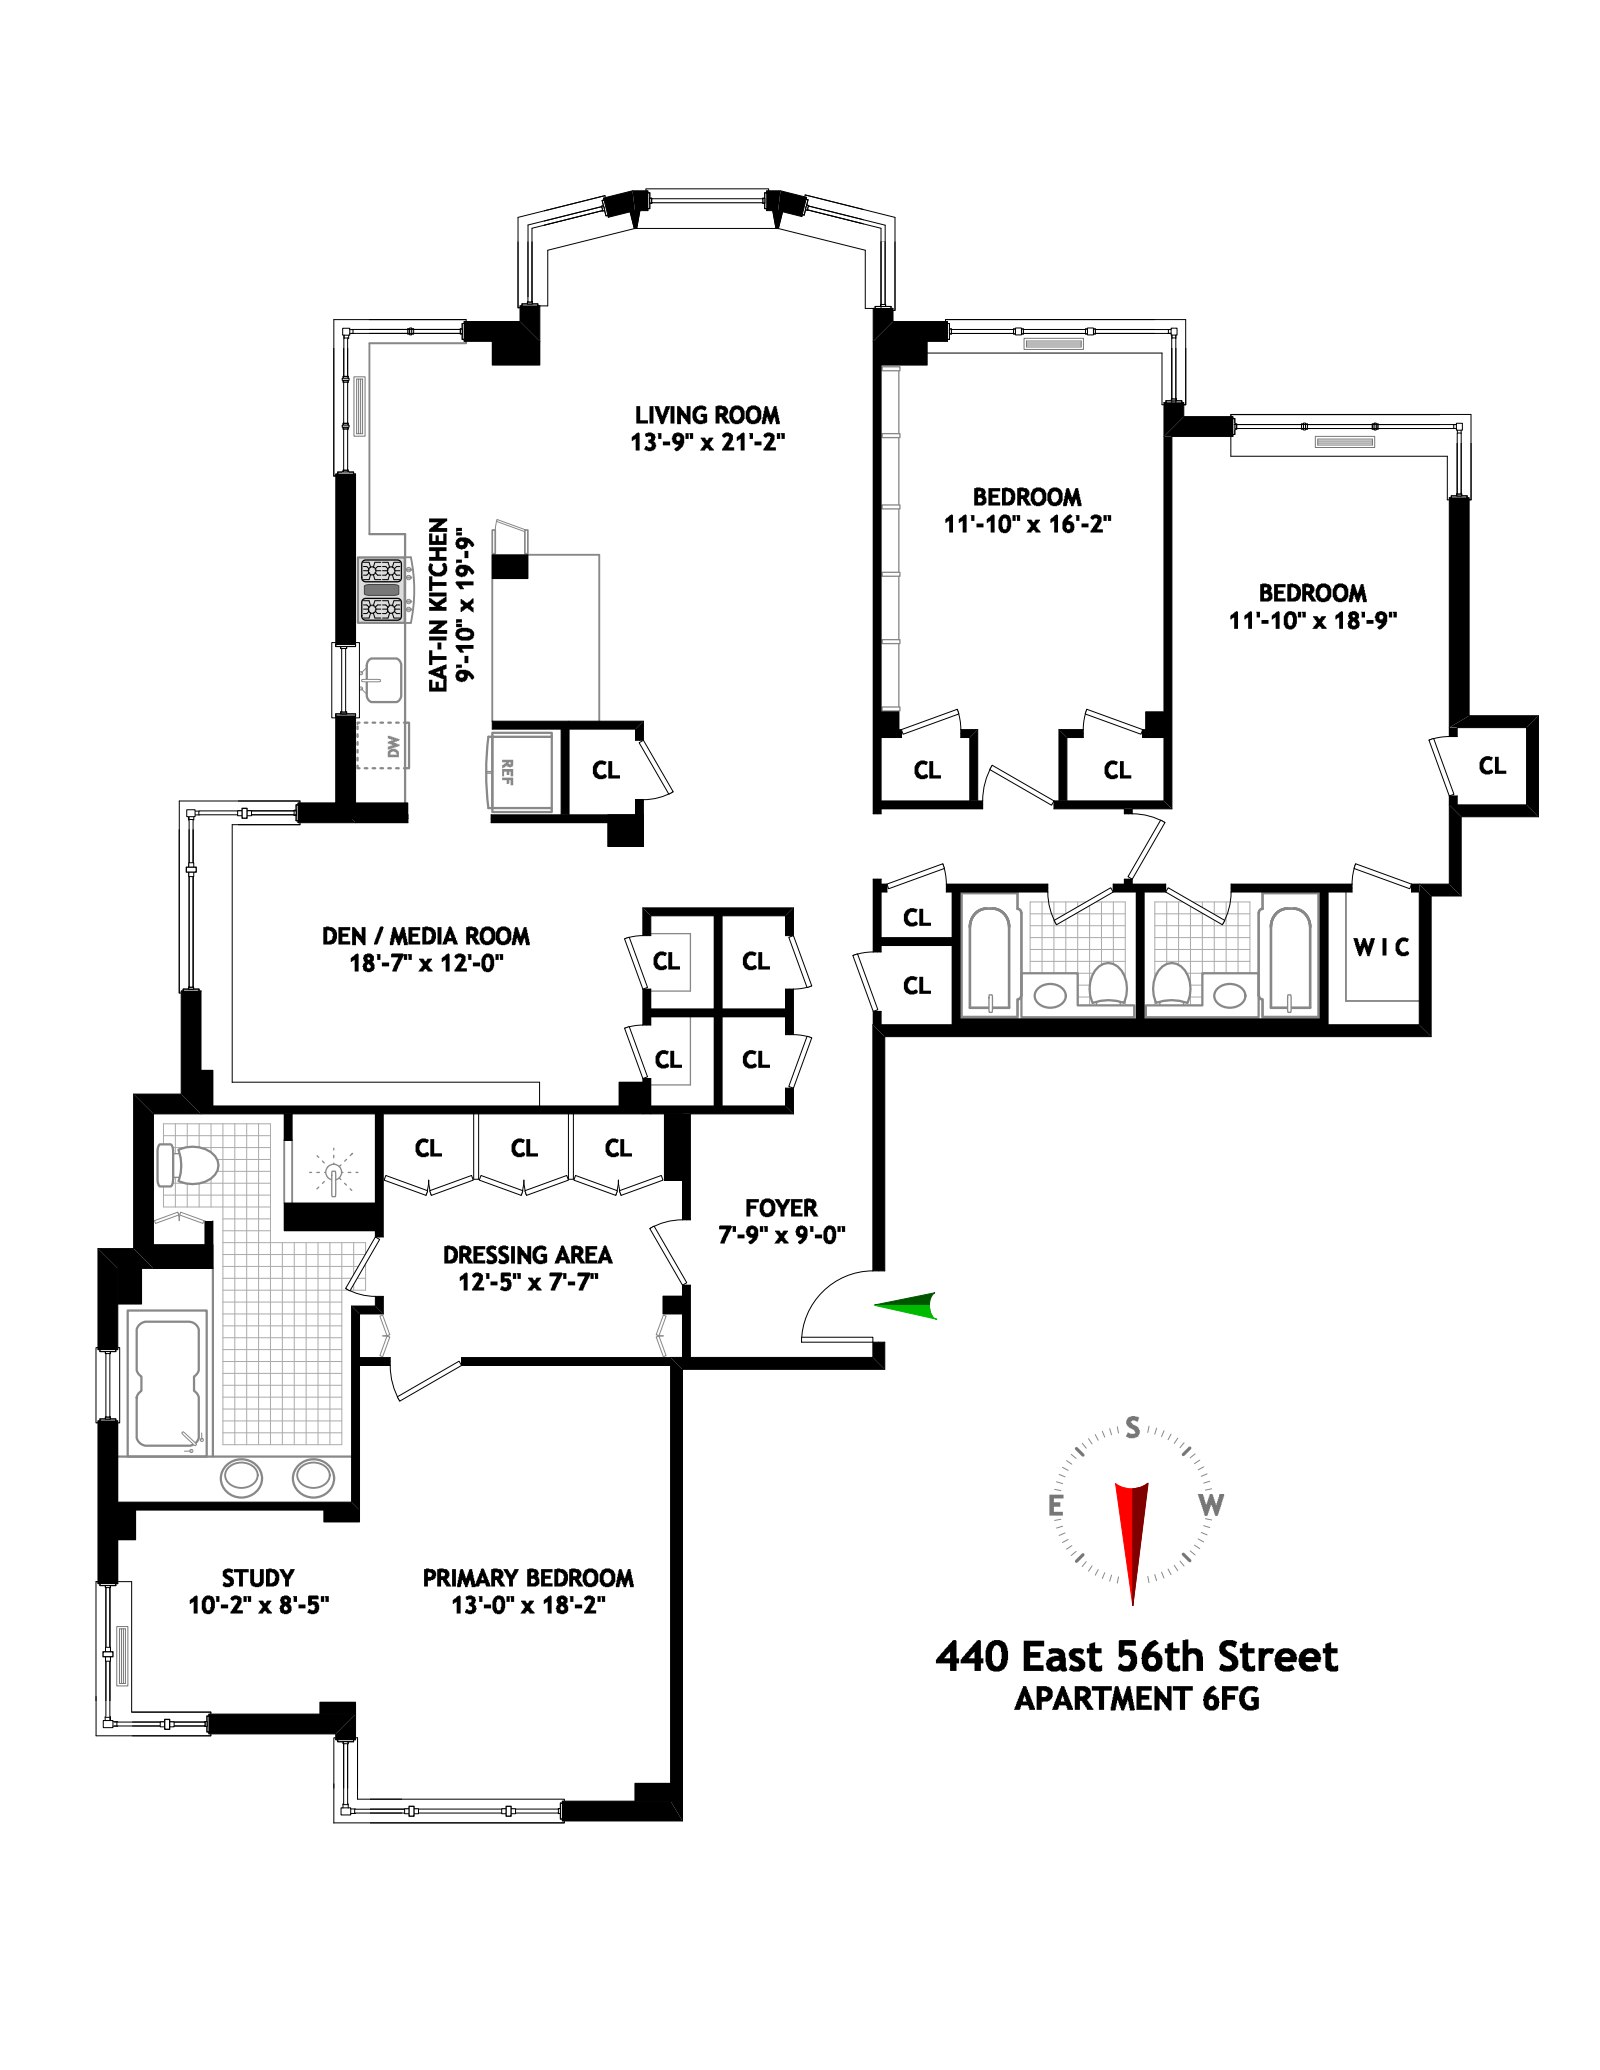 Floorplan for 440 East 56th Street, 6FG